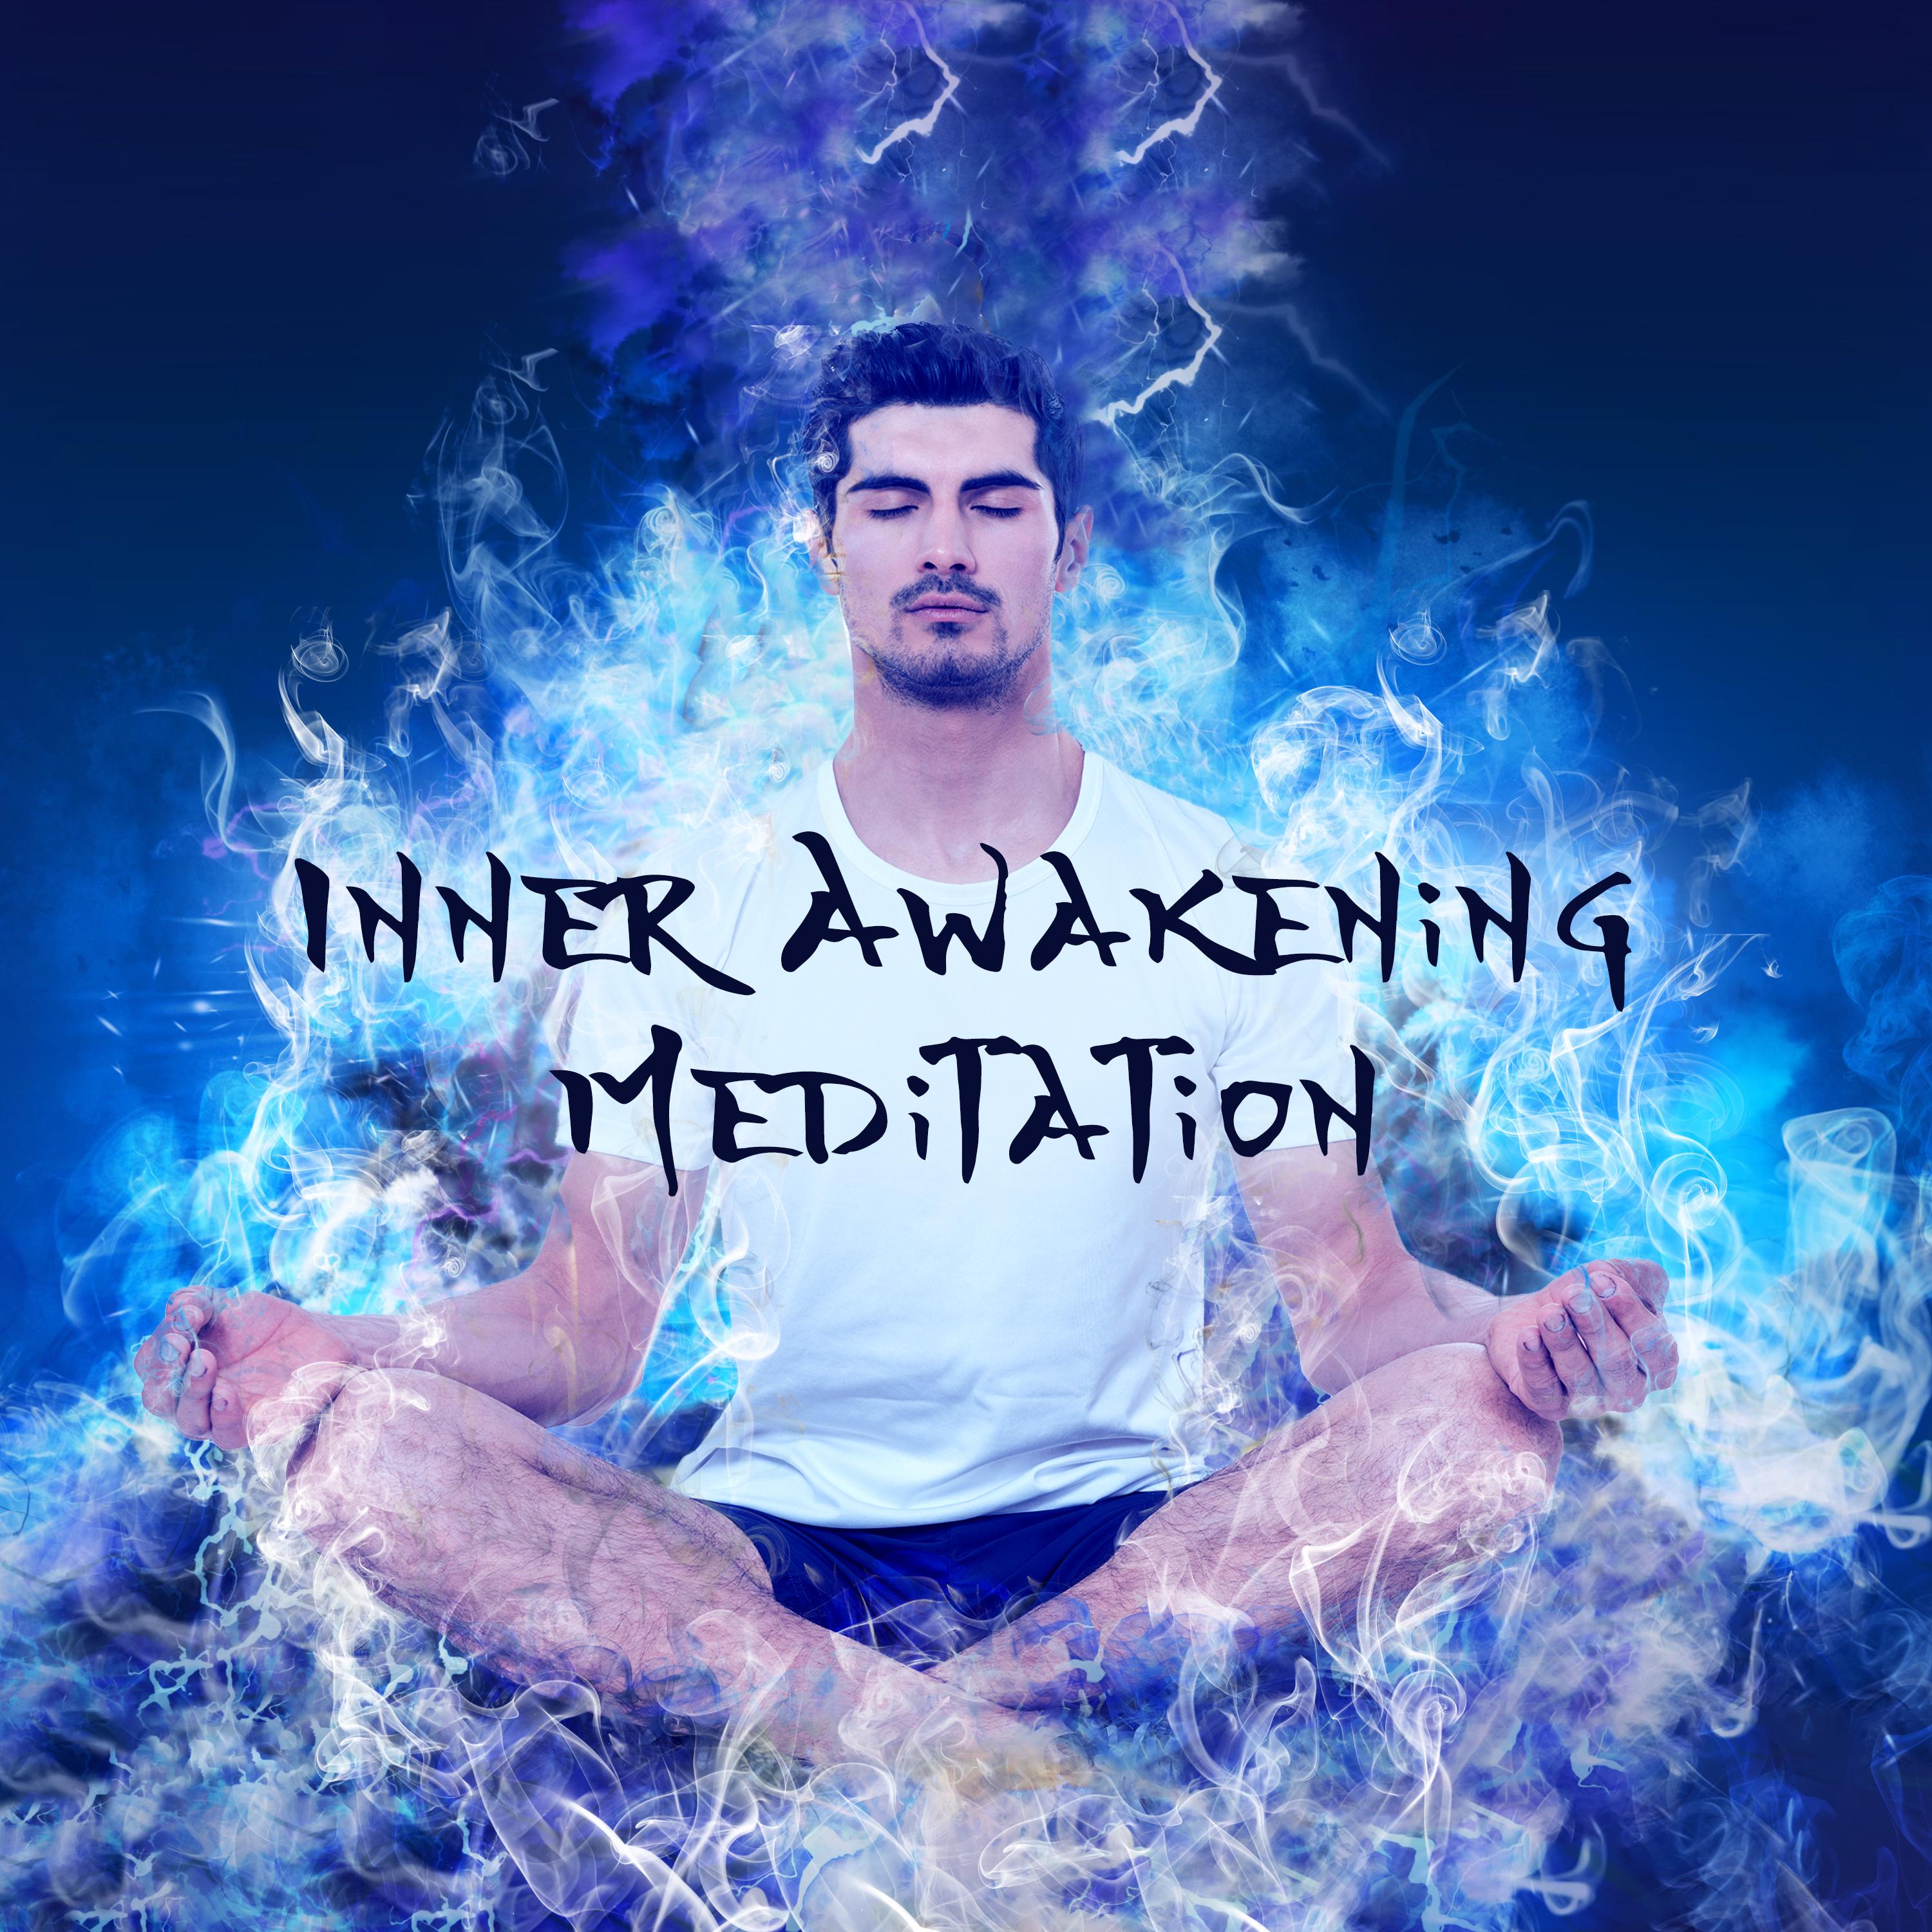 Inner Awakening Meditation (Hypnotic & Healing Sounds, Experience Spiritual Trance & Changes)